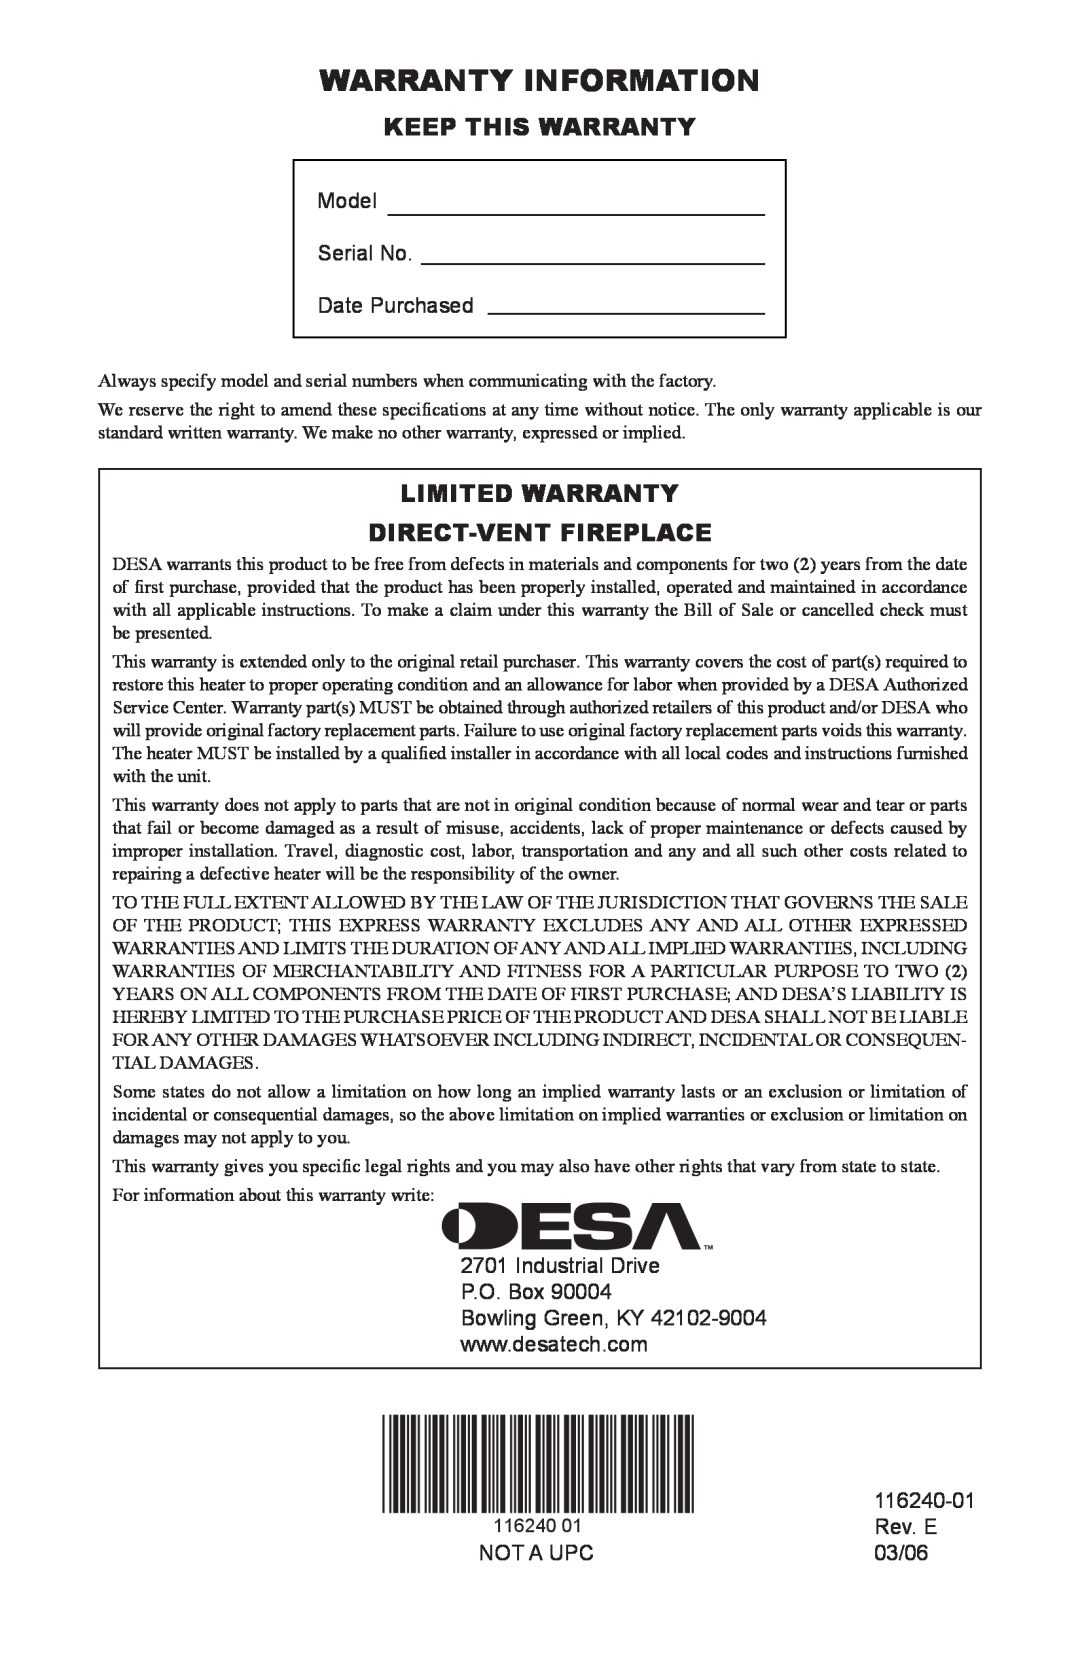 Desa (V)KC42PE installation manual Warranty Information, Keep This Warranty, Limited Warranty Direct-Ventfireplace 